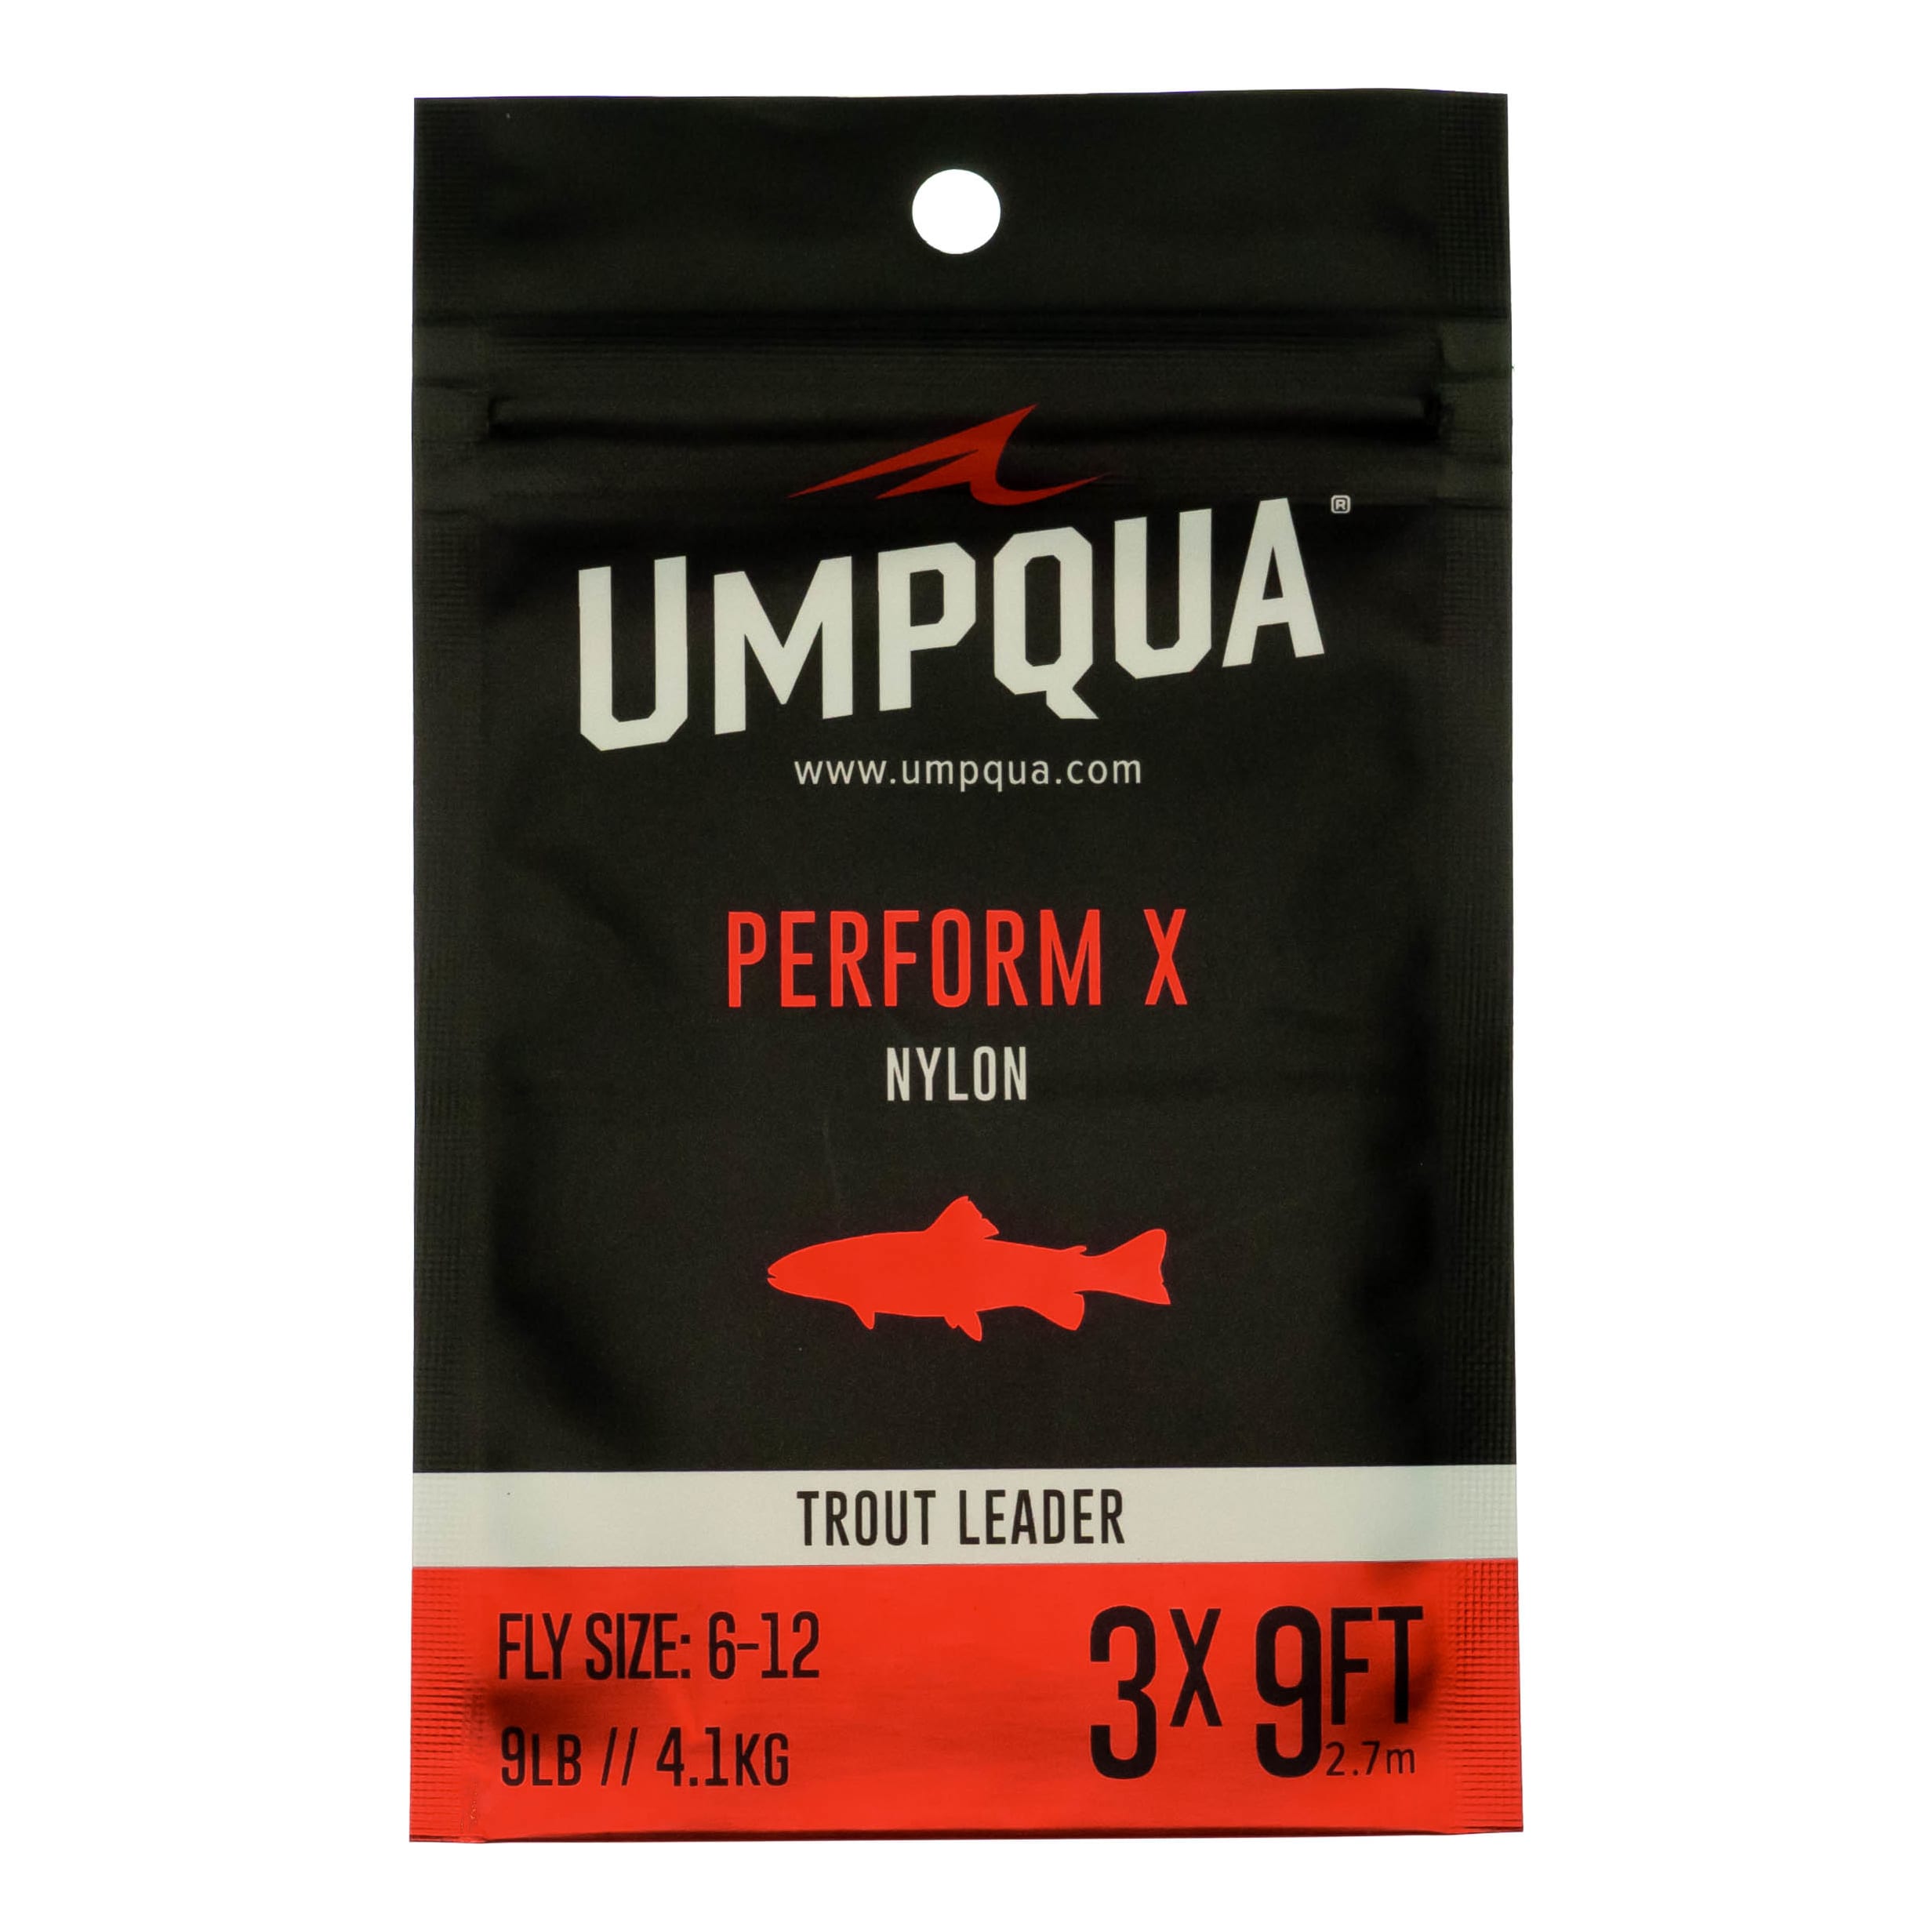 Umpqua Perform X Trout Leader